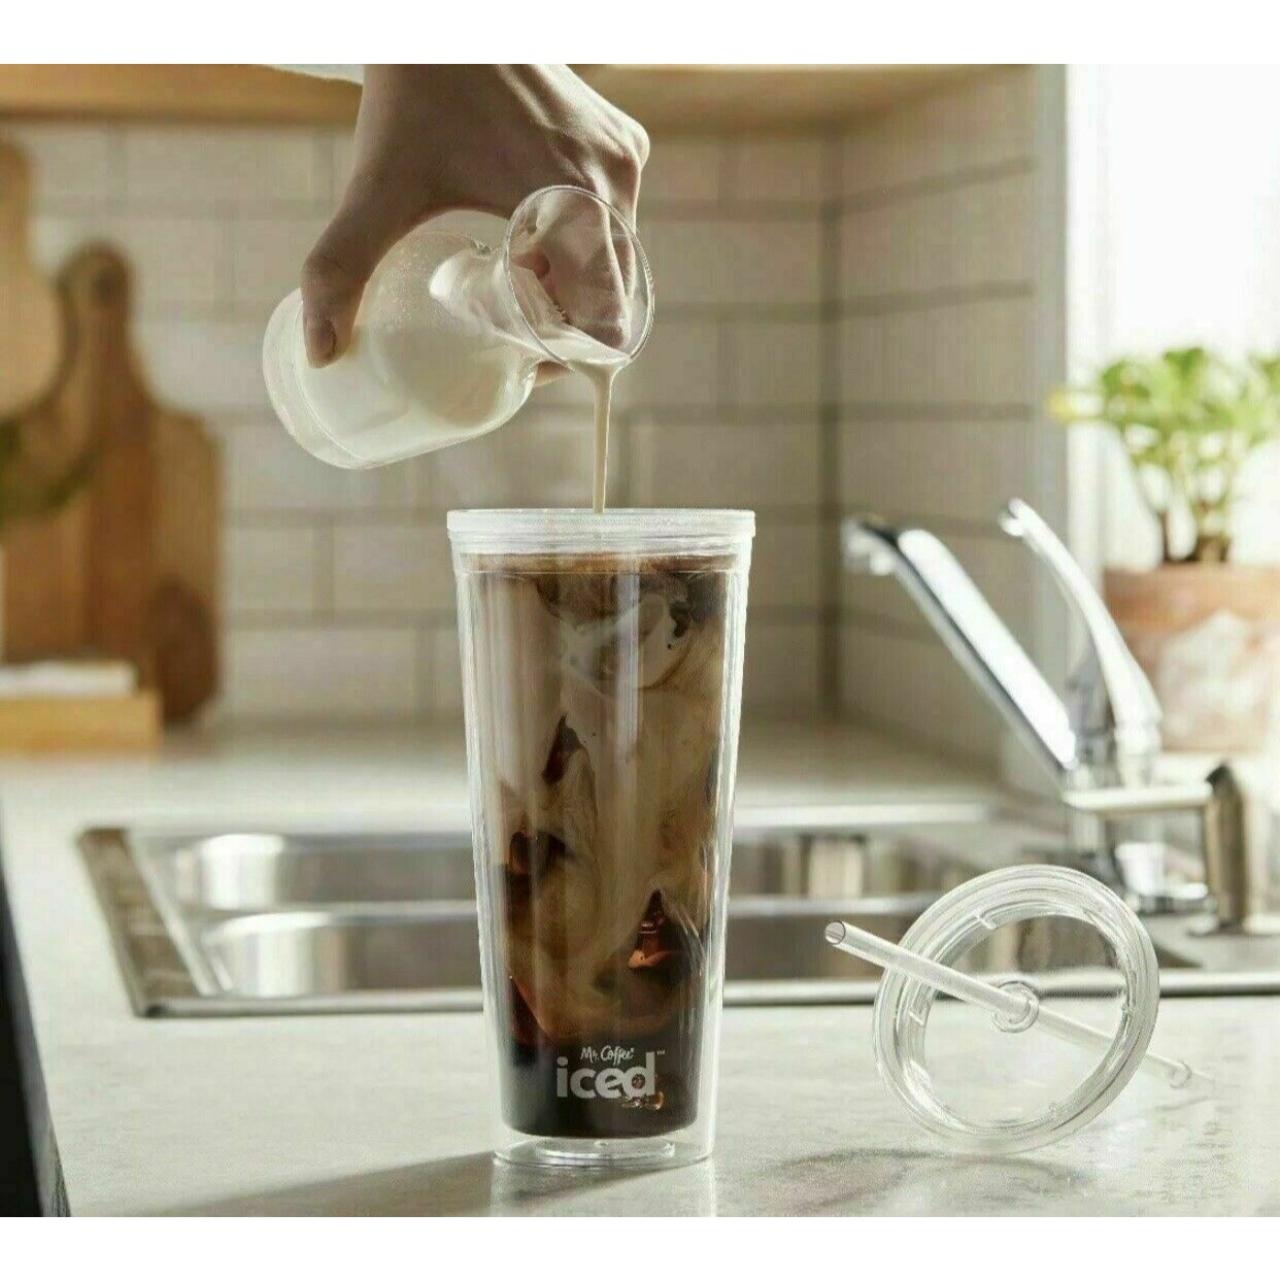 Mr. Coffee Iced Coffee Maker Single Serve Hot Cold - Depop